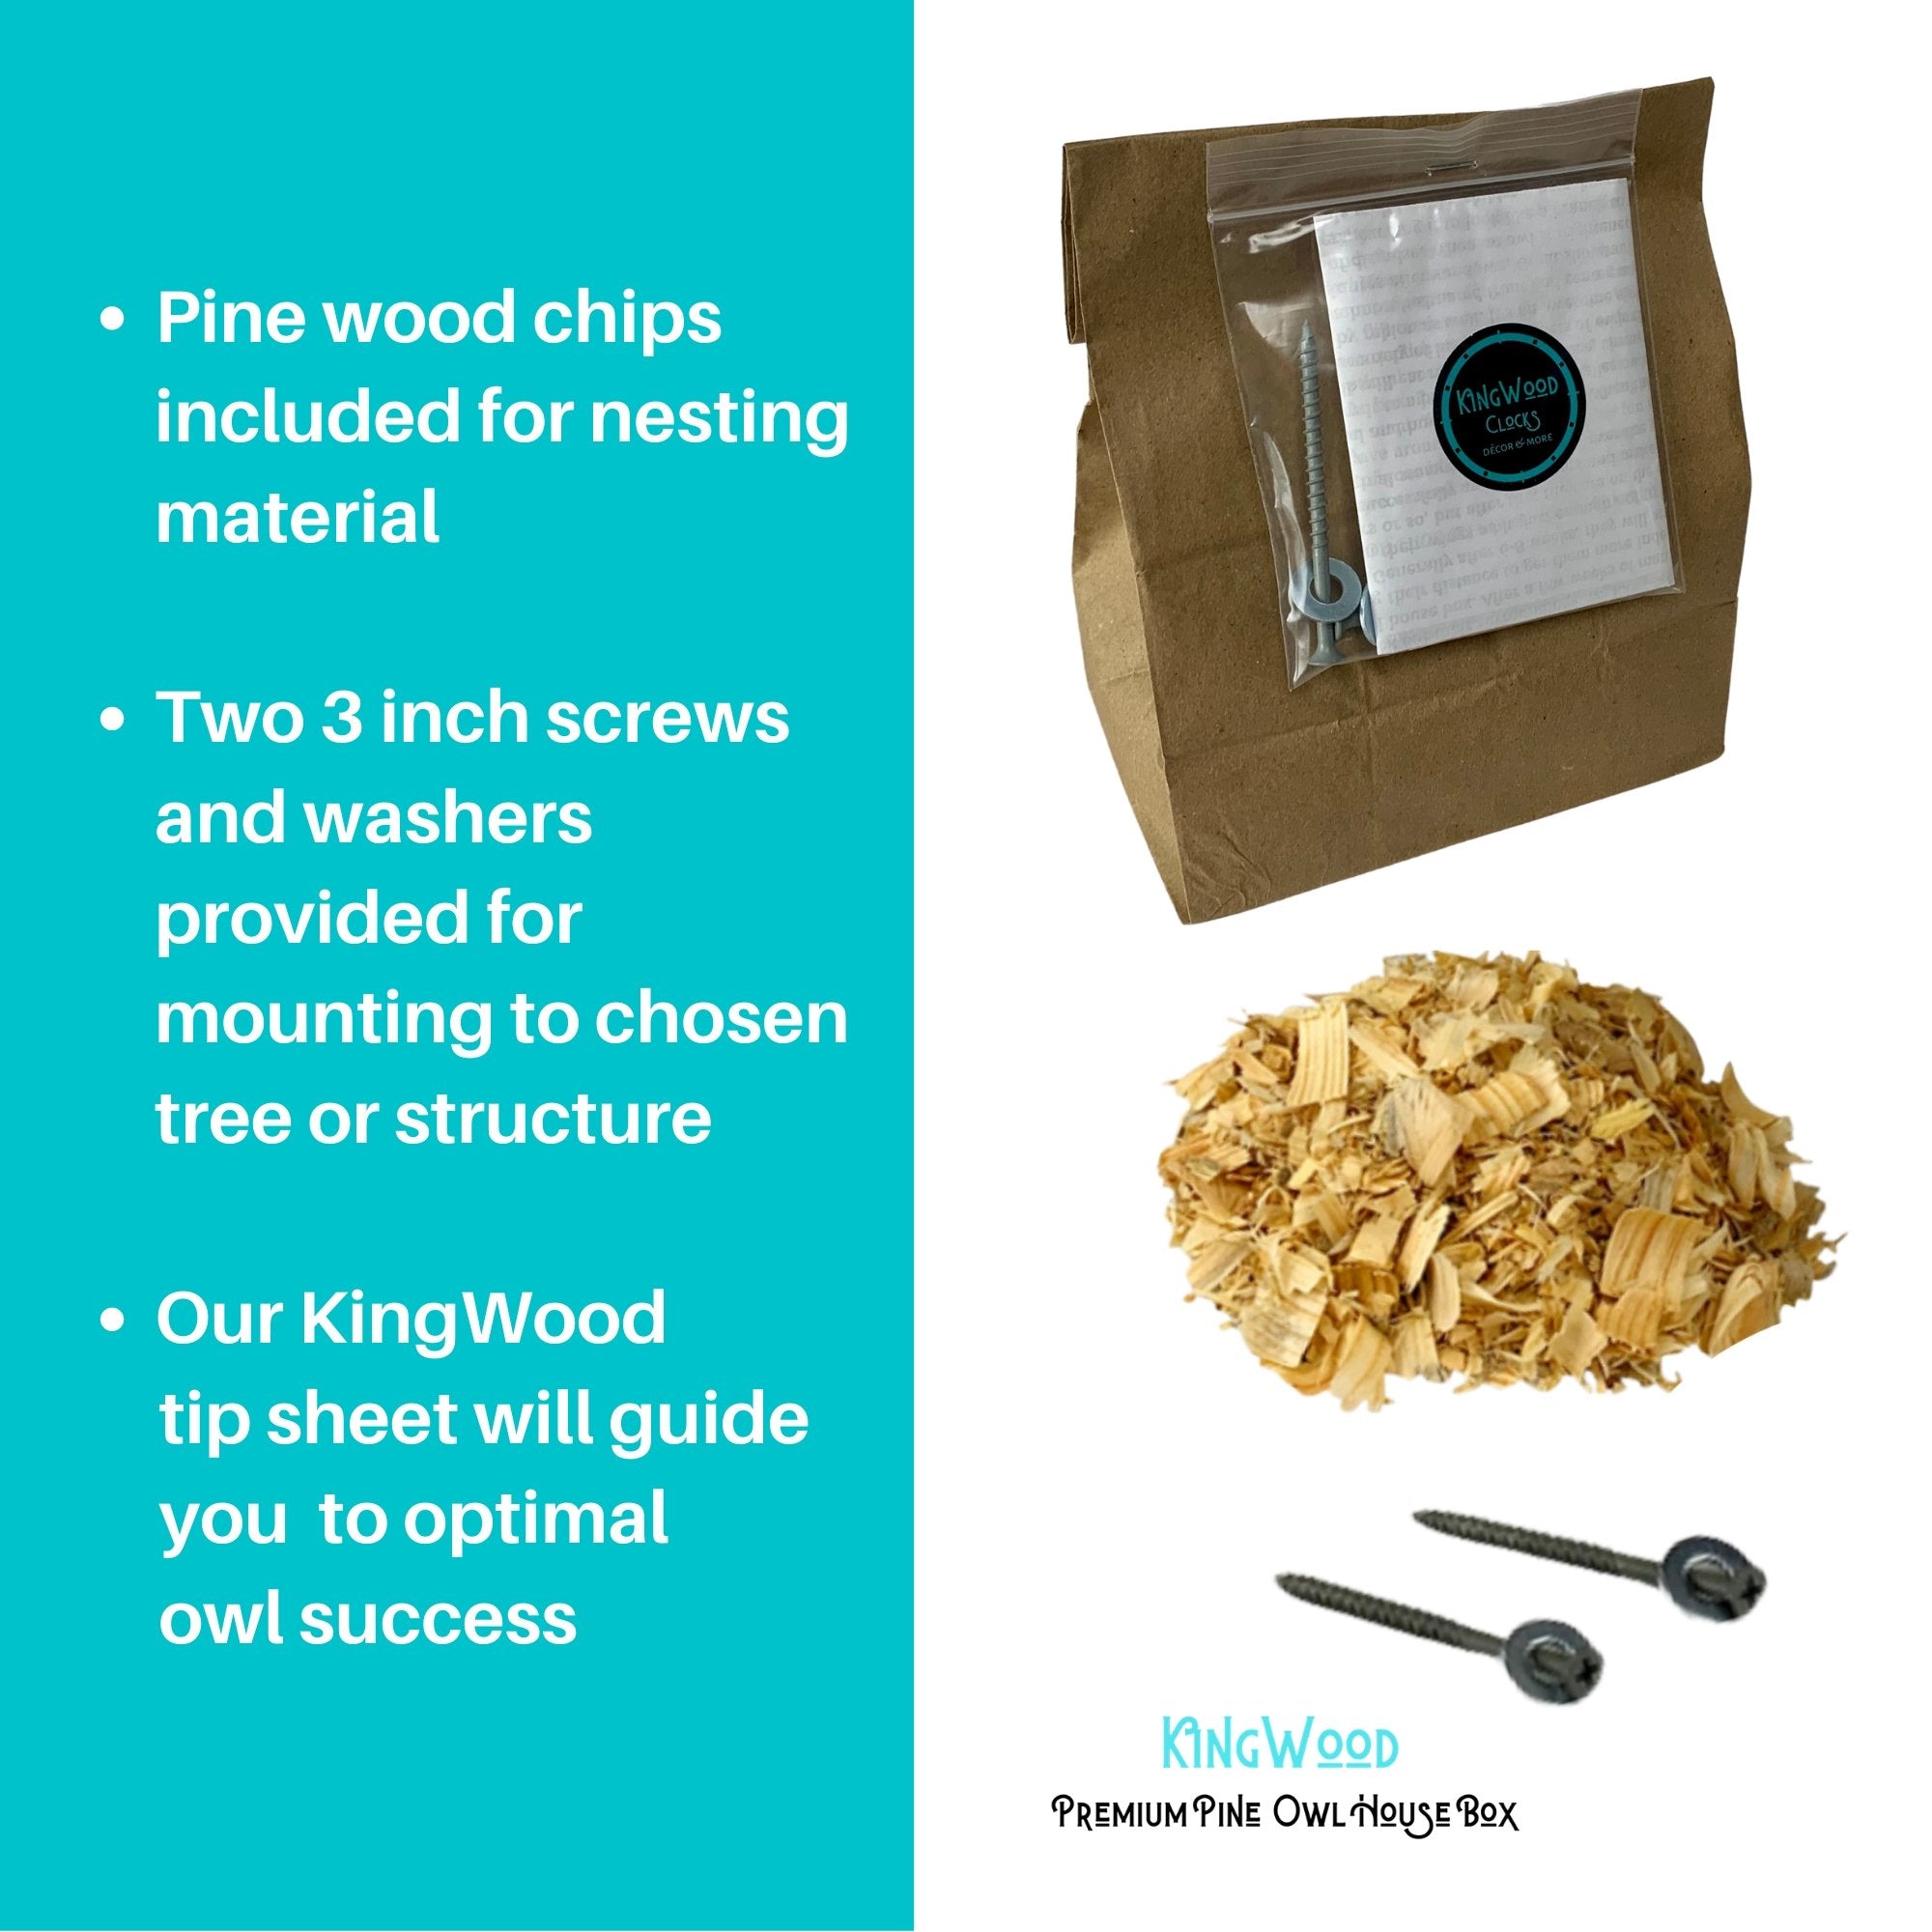 KingWood Premium Pine Owl House Box pine wood nesting chips